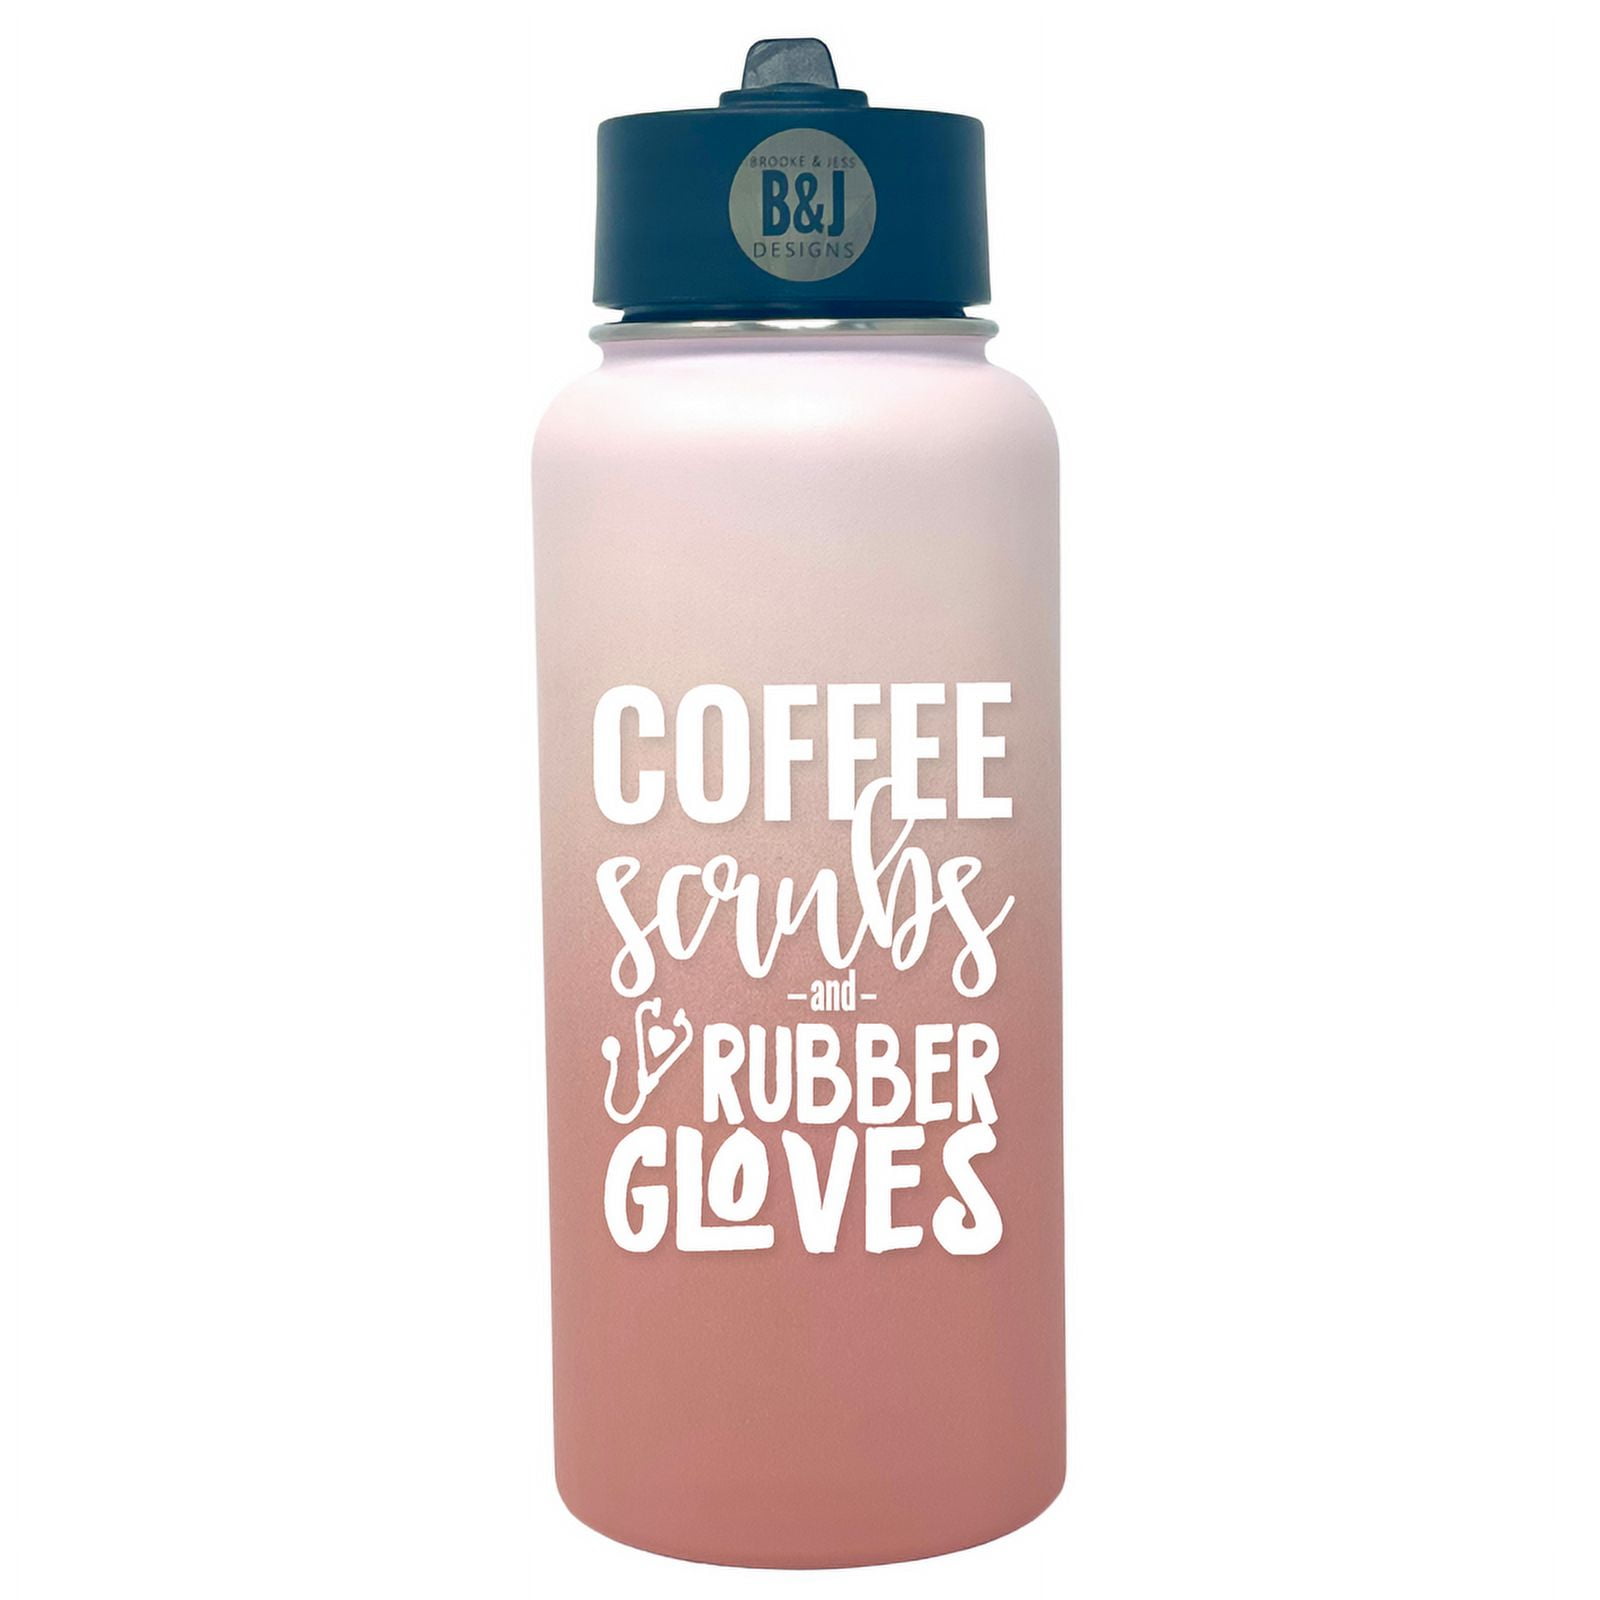 Water Scrubs Rubber Gloves Nurse Motivational Water Bottle